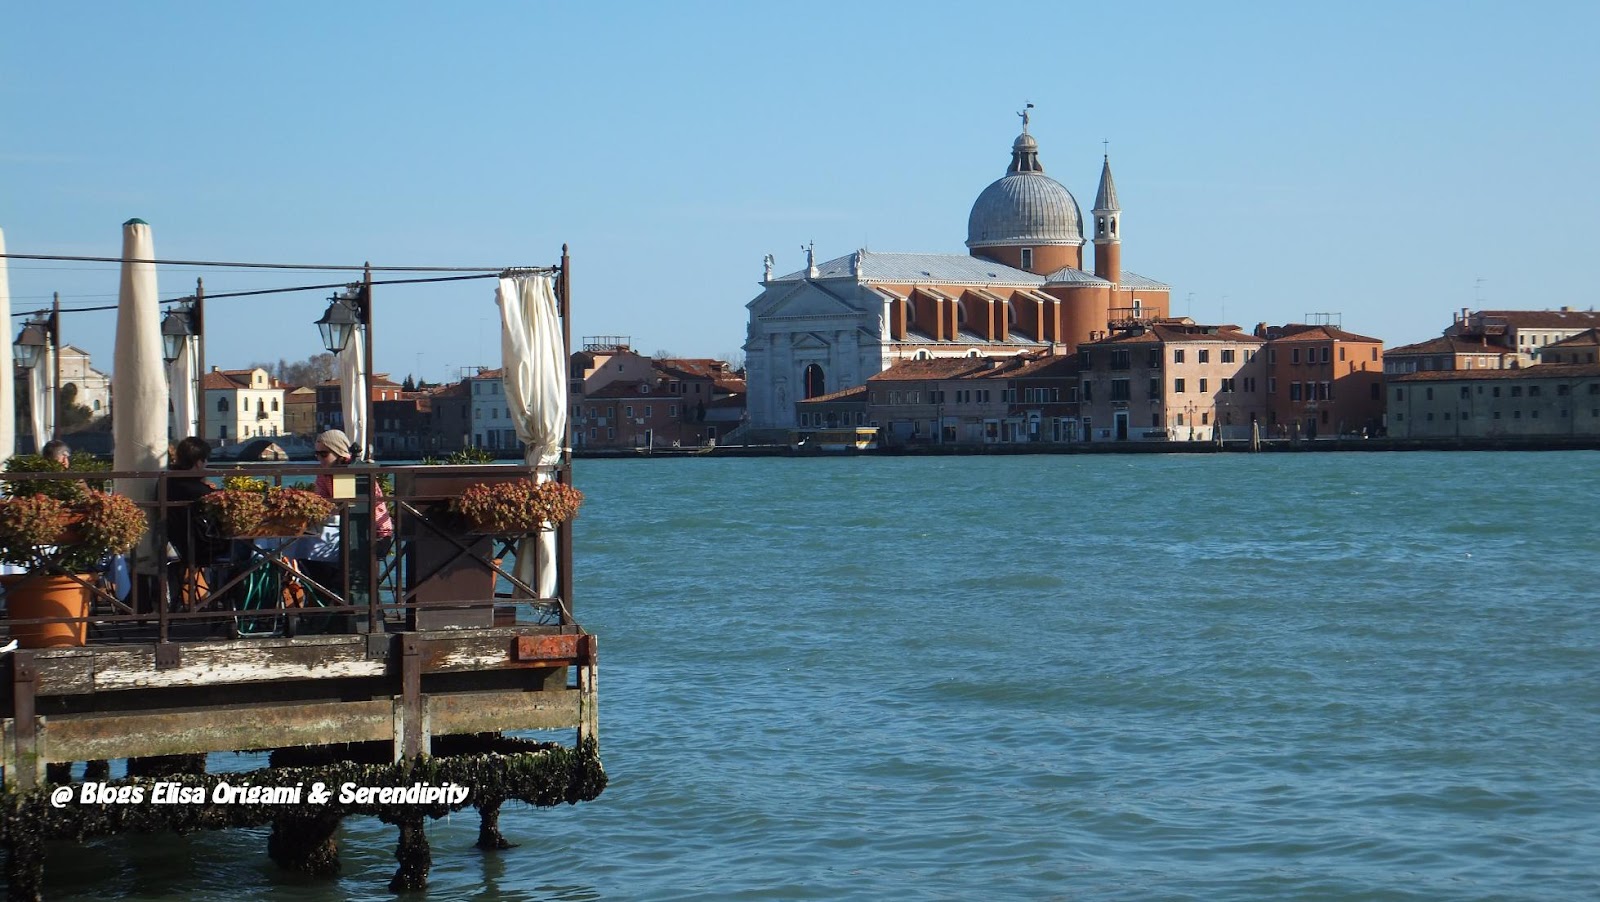 Fondamenta delle Zattere, Venecia, Italia, Elisa N, Blog de Viajes, Lifestyle, Travel